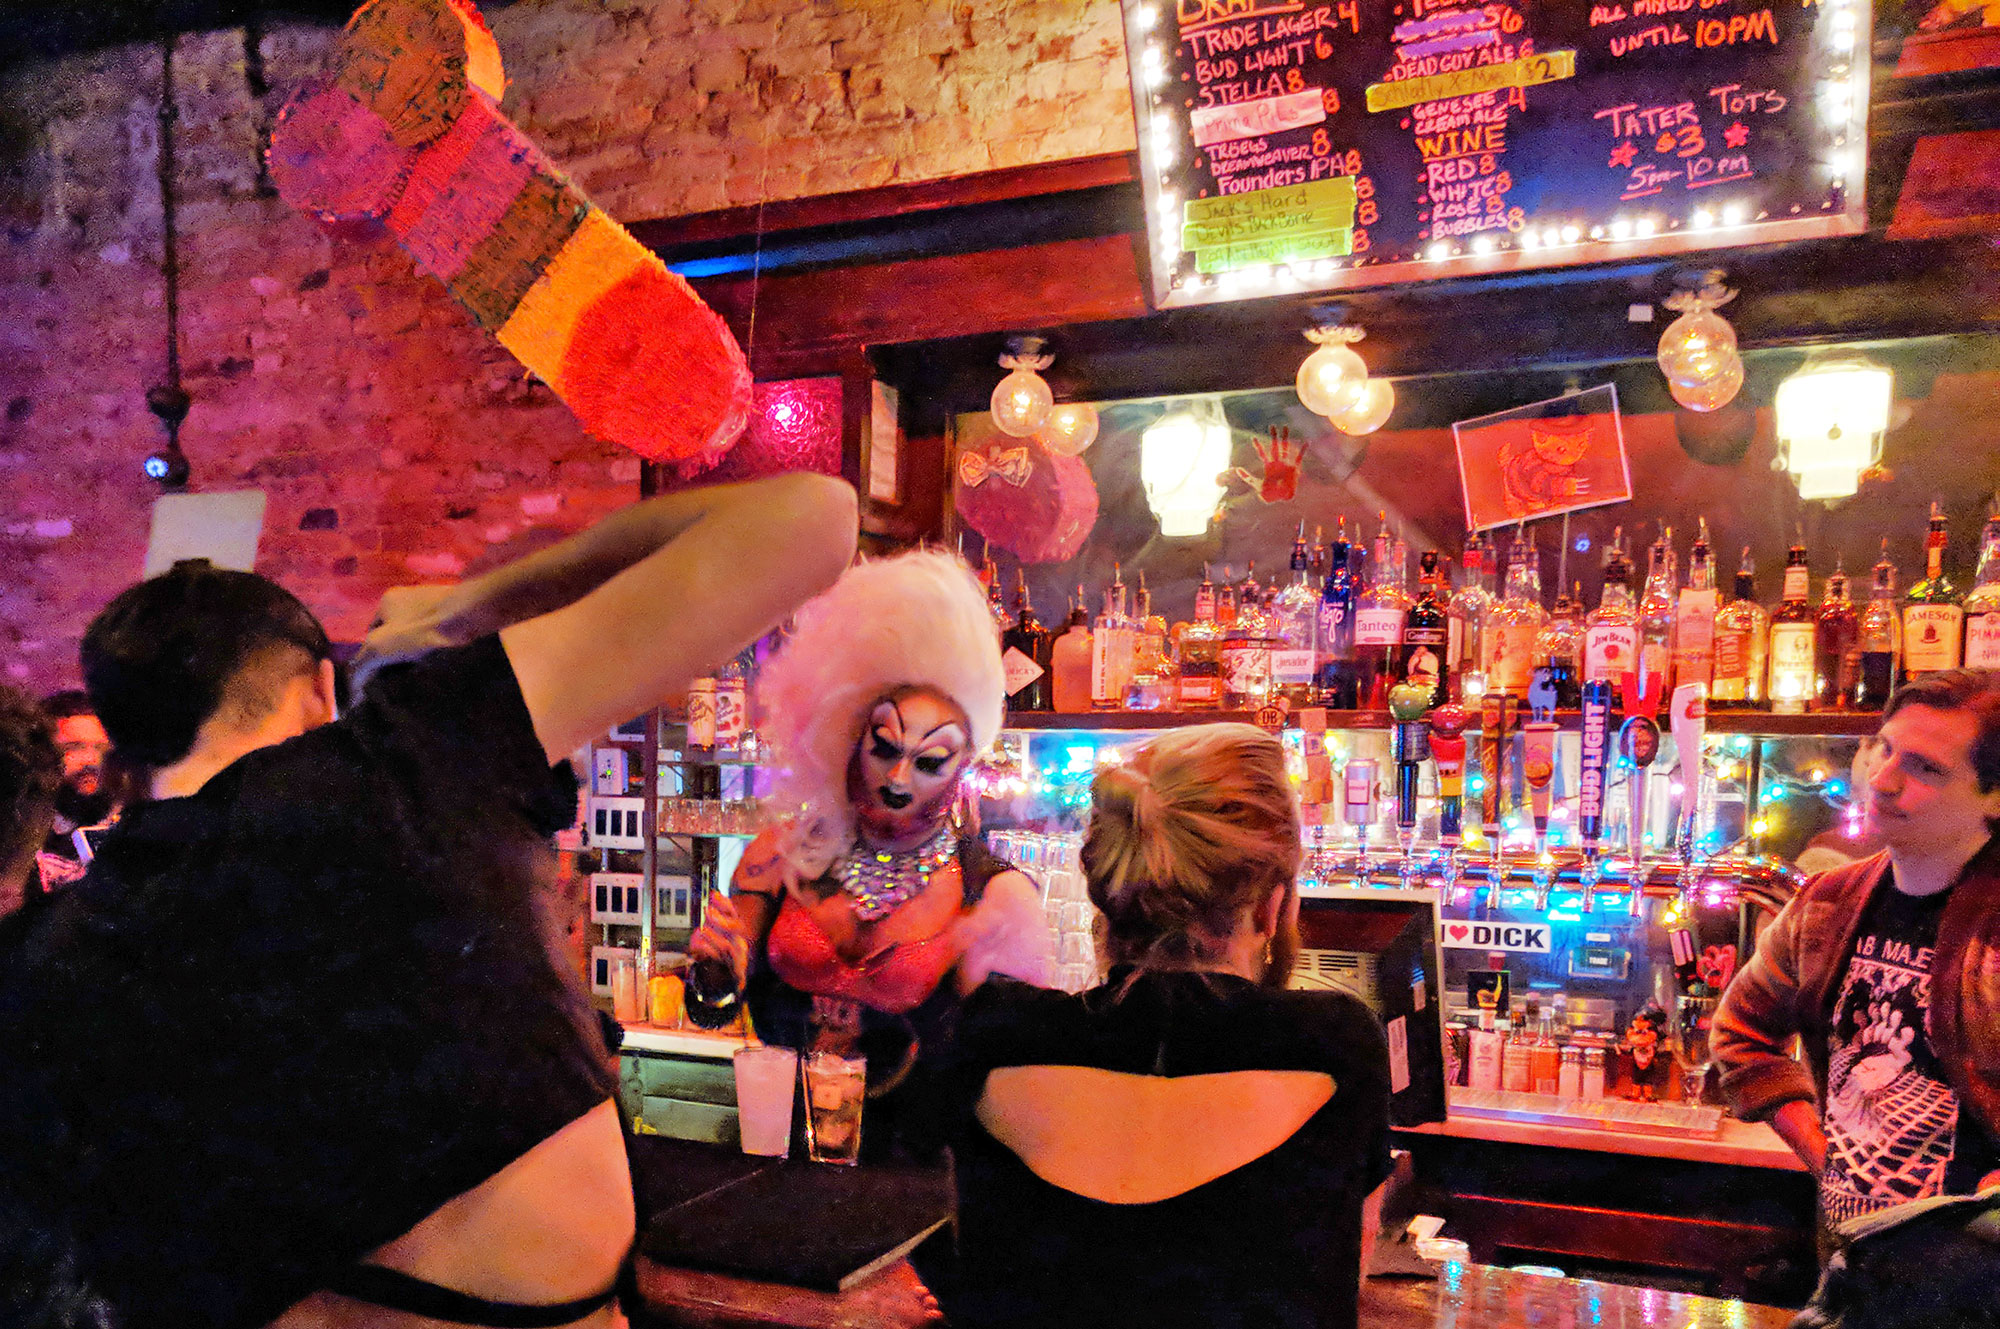 A drag queen bartender at TRADE bar in Washington D.C.